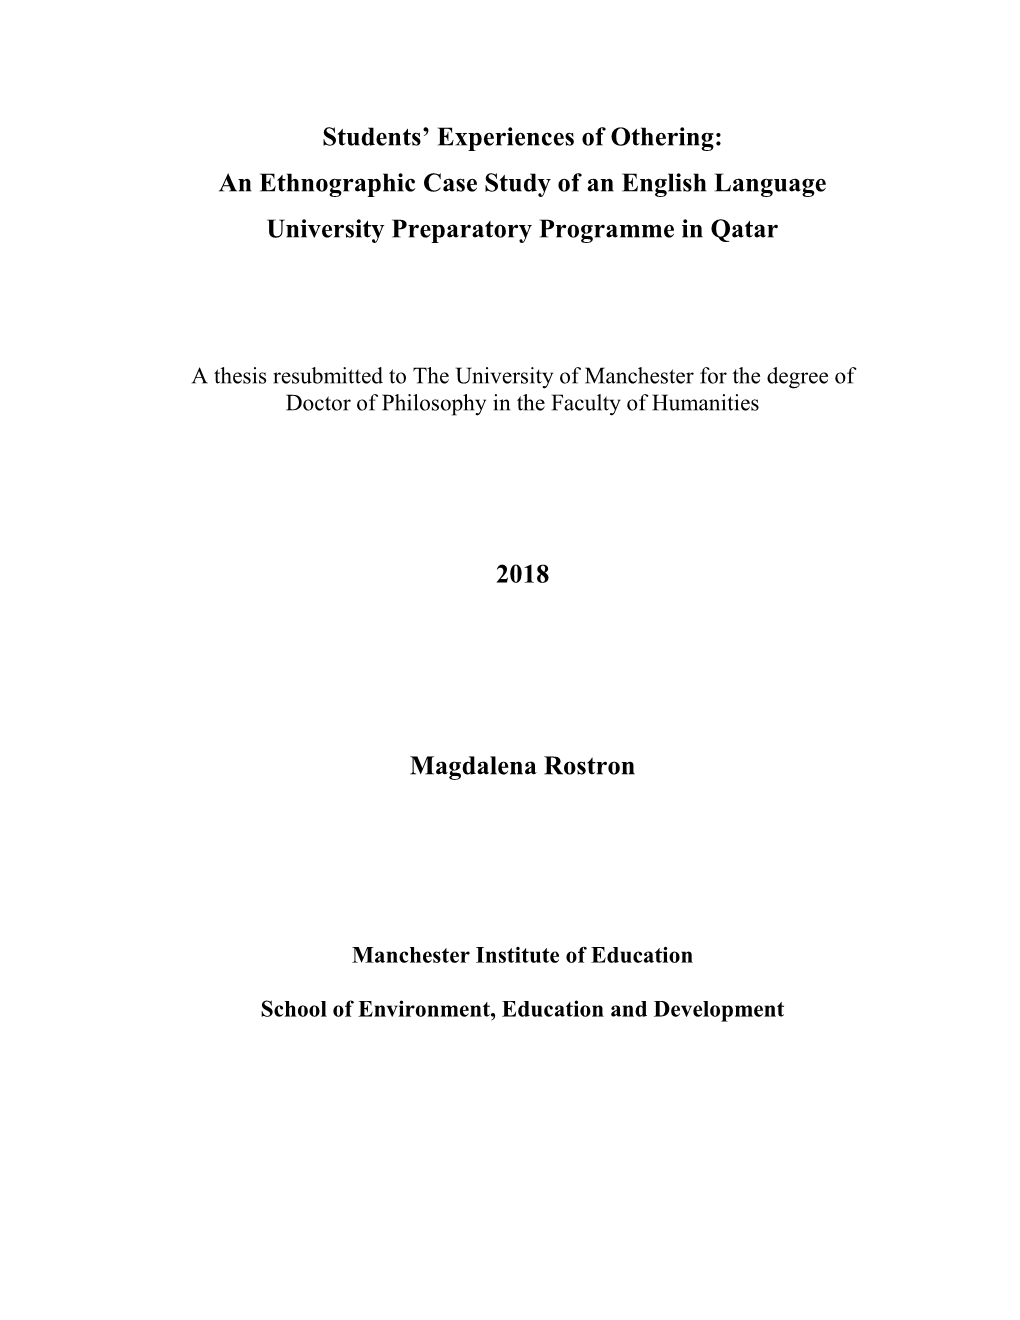 An Ethnographic Case Study of an English Language University Preparatory Programme in Qatar